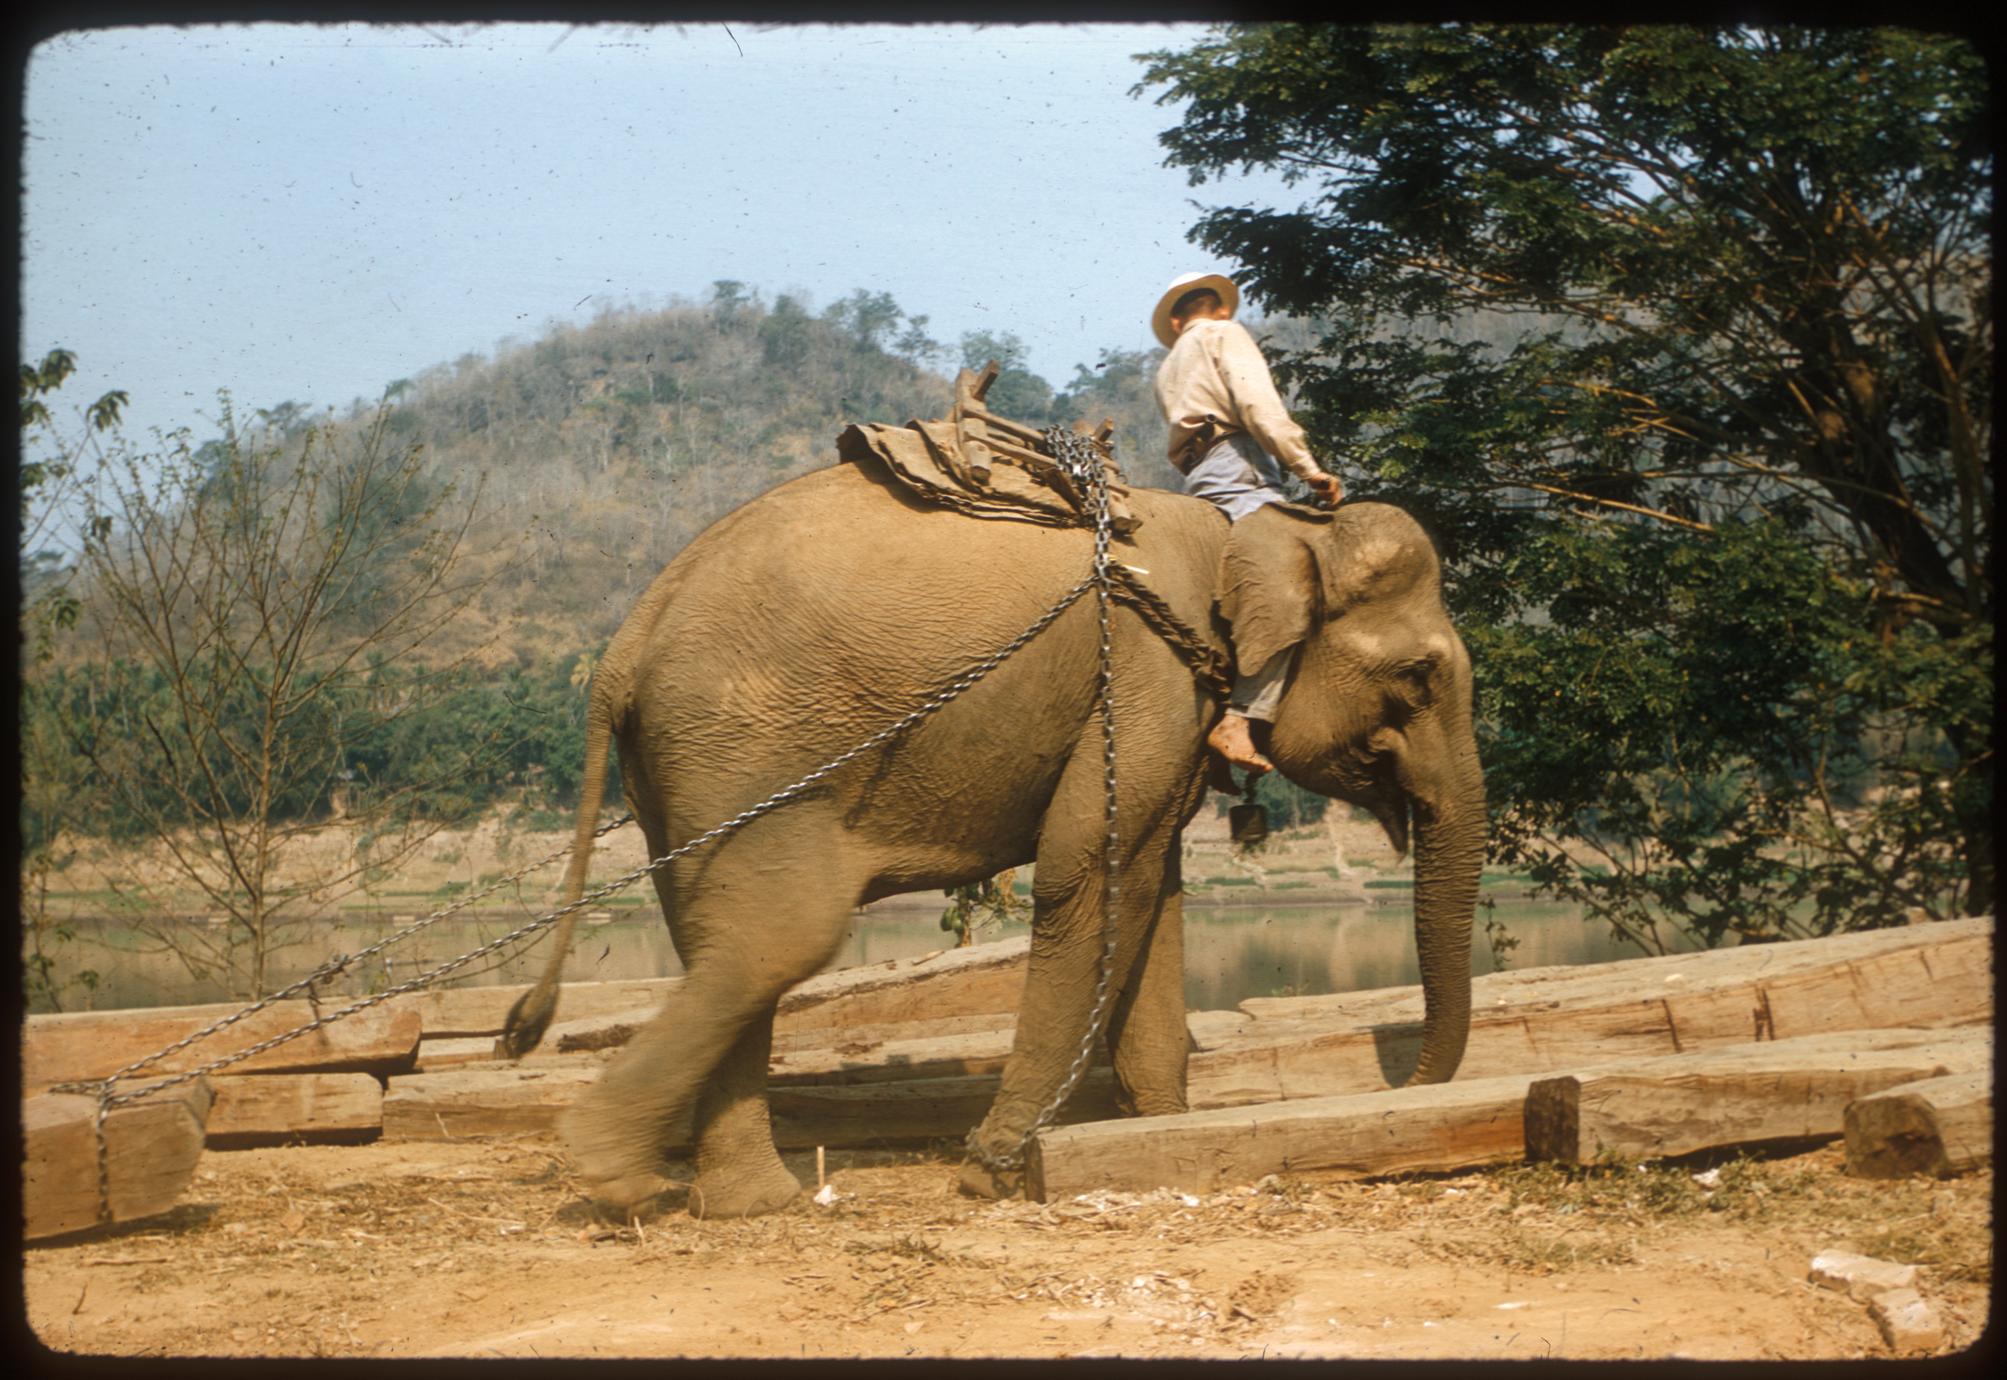 Elephant hauling teak